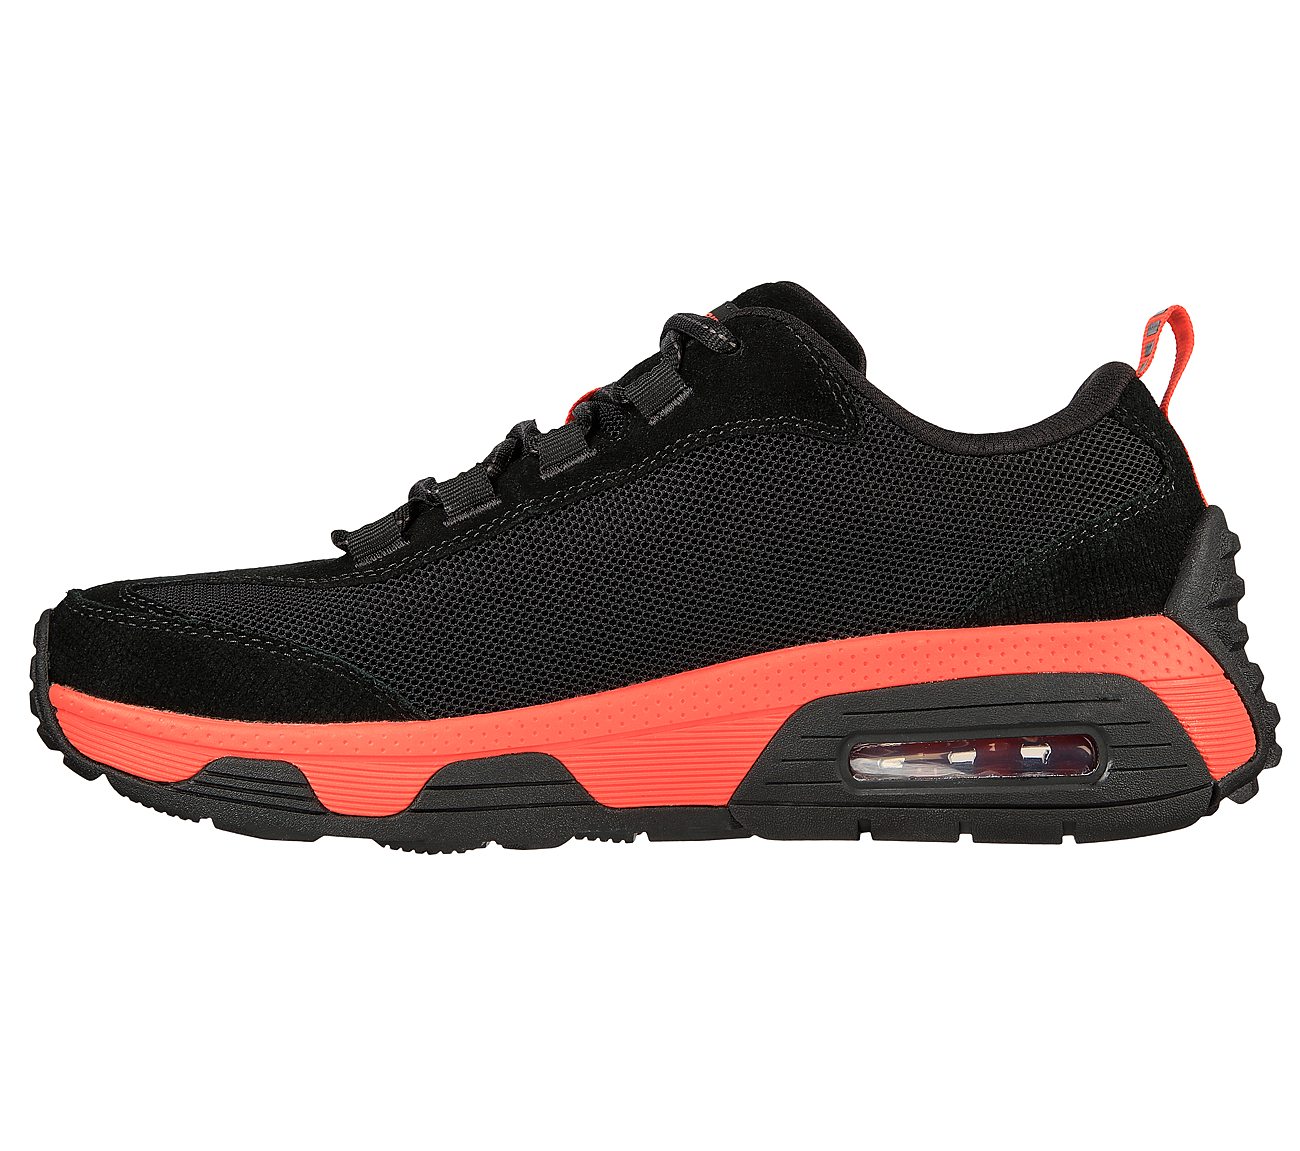 SKECH-AIR EXTREME V2 - BRAZEN, BLACK/RED Footwear Left View